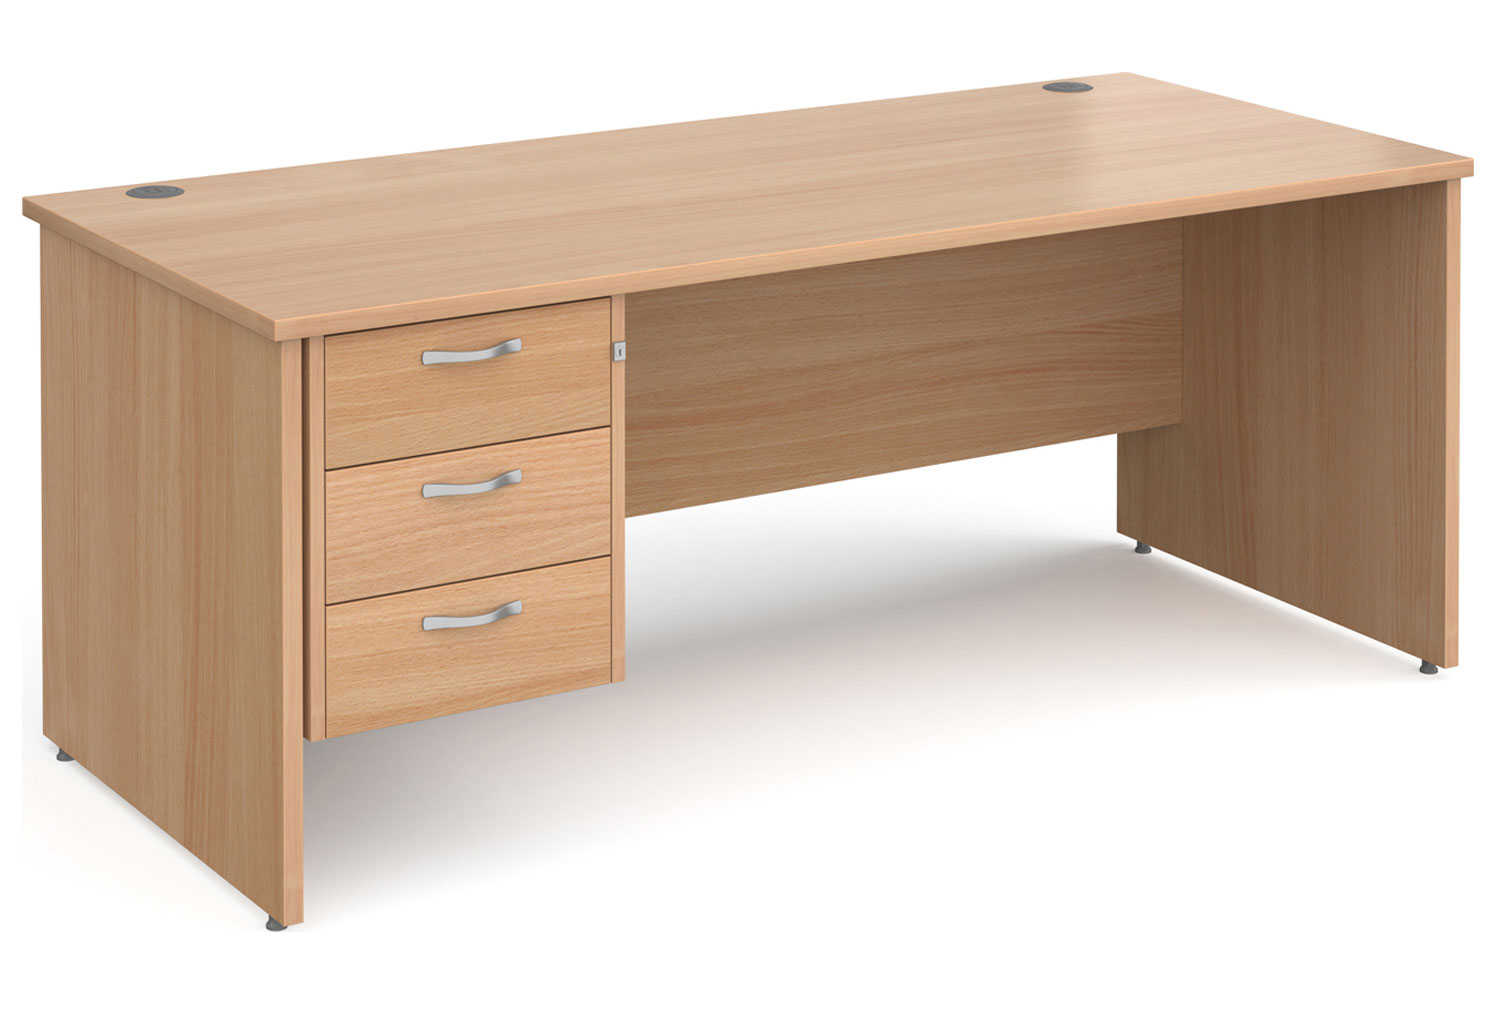 Tully Panel End Rectangular Office Desk 3 Drawers, 180wx80dx73h (cm), Beech